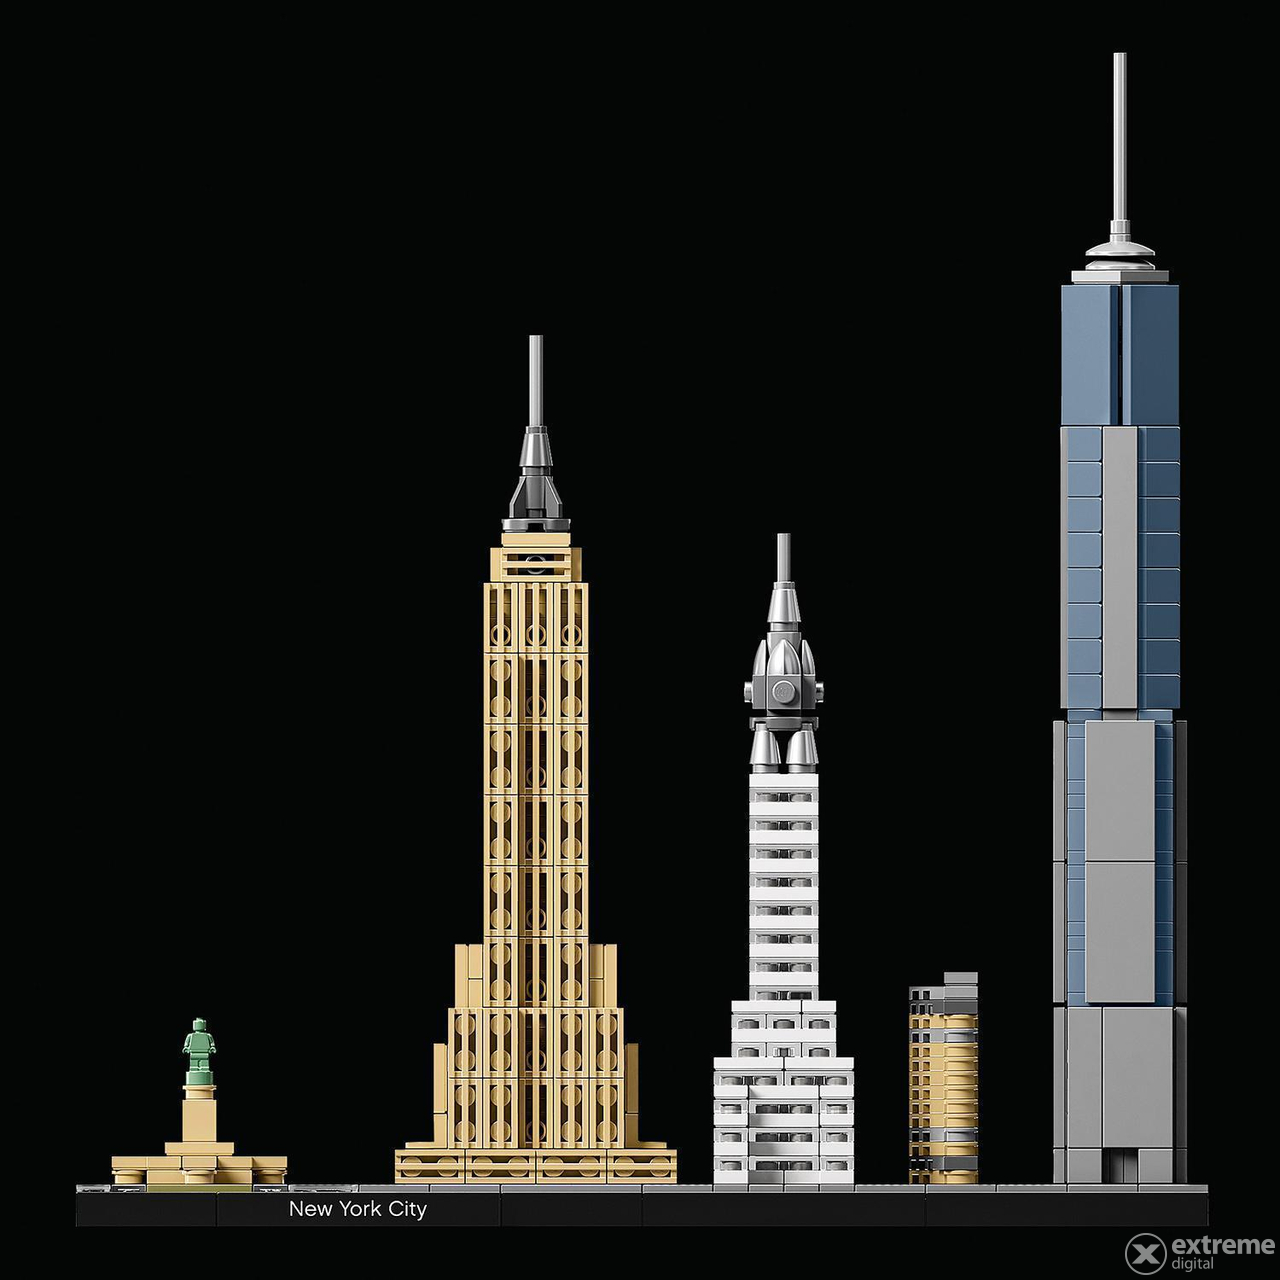 LEGO® Architecture New York City 21028